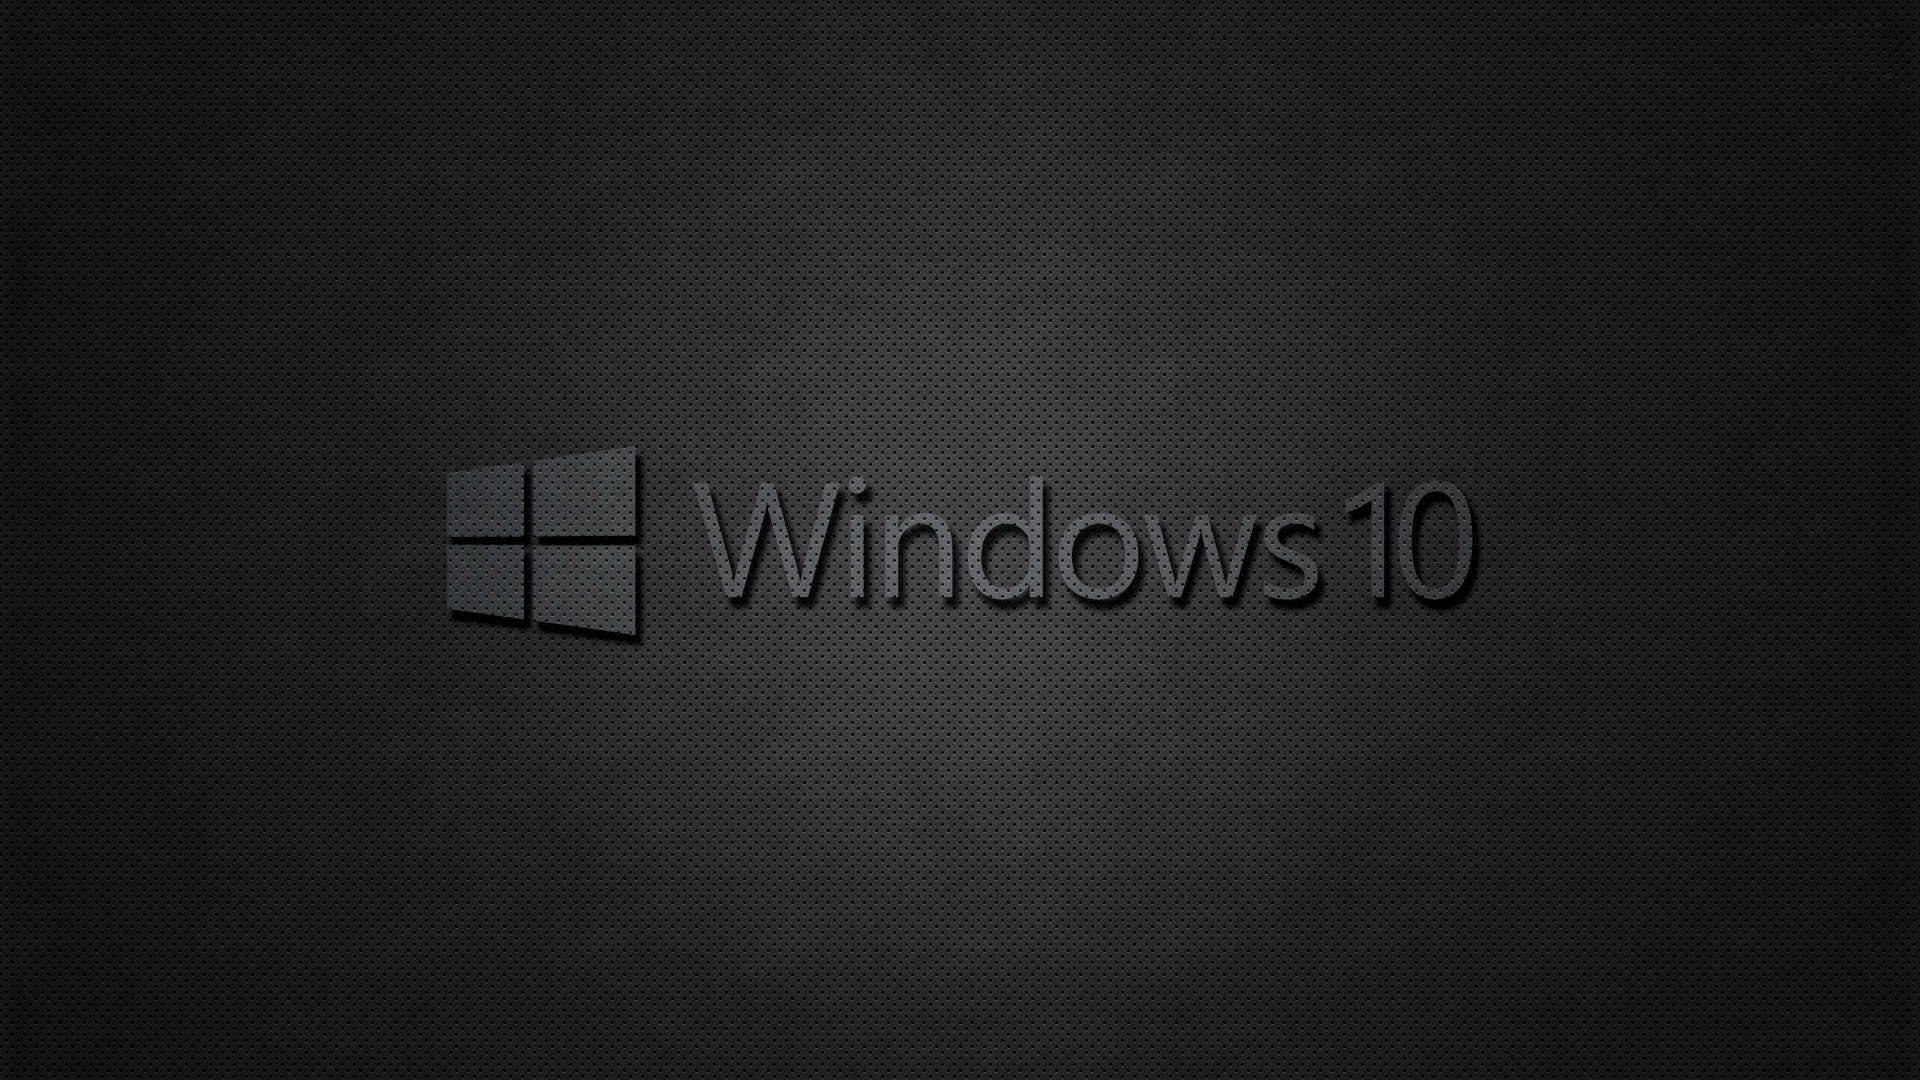 Black Windows 10 Hd With Wordmark Background